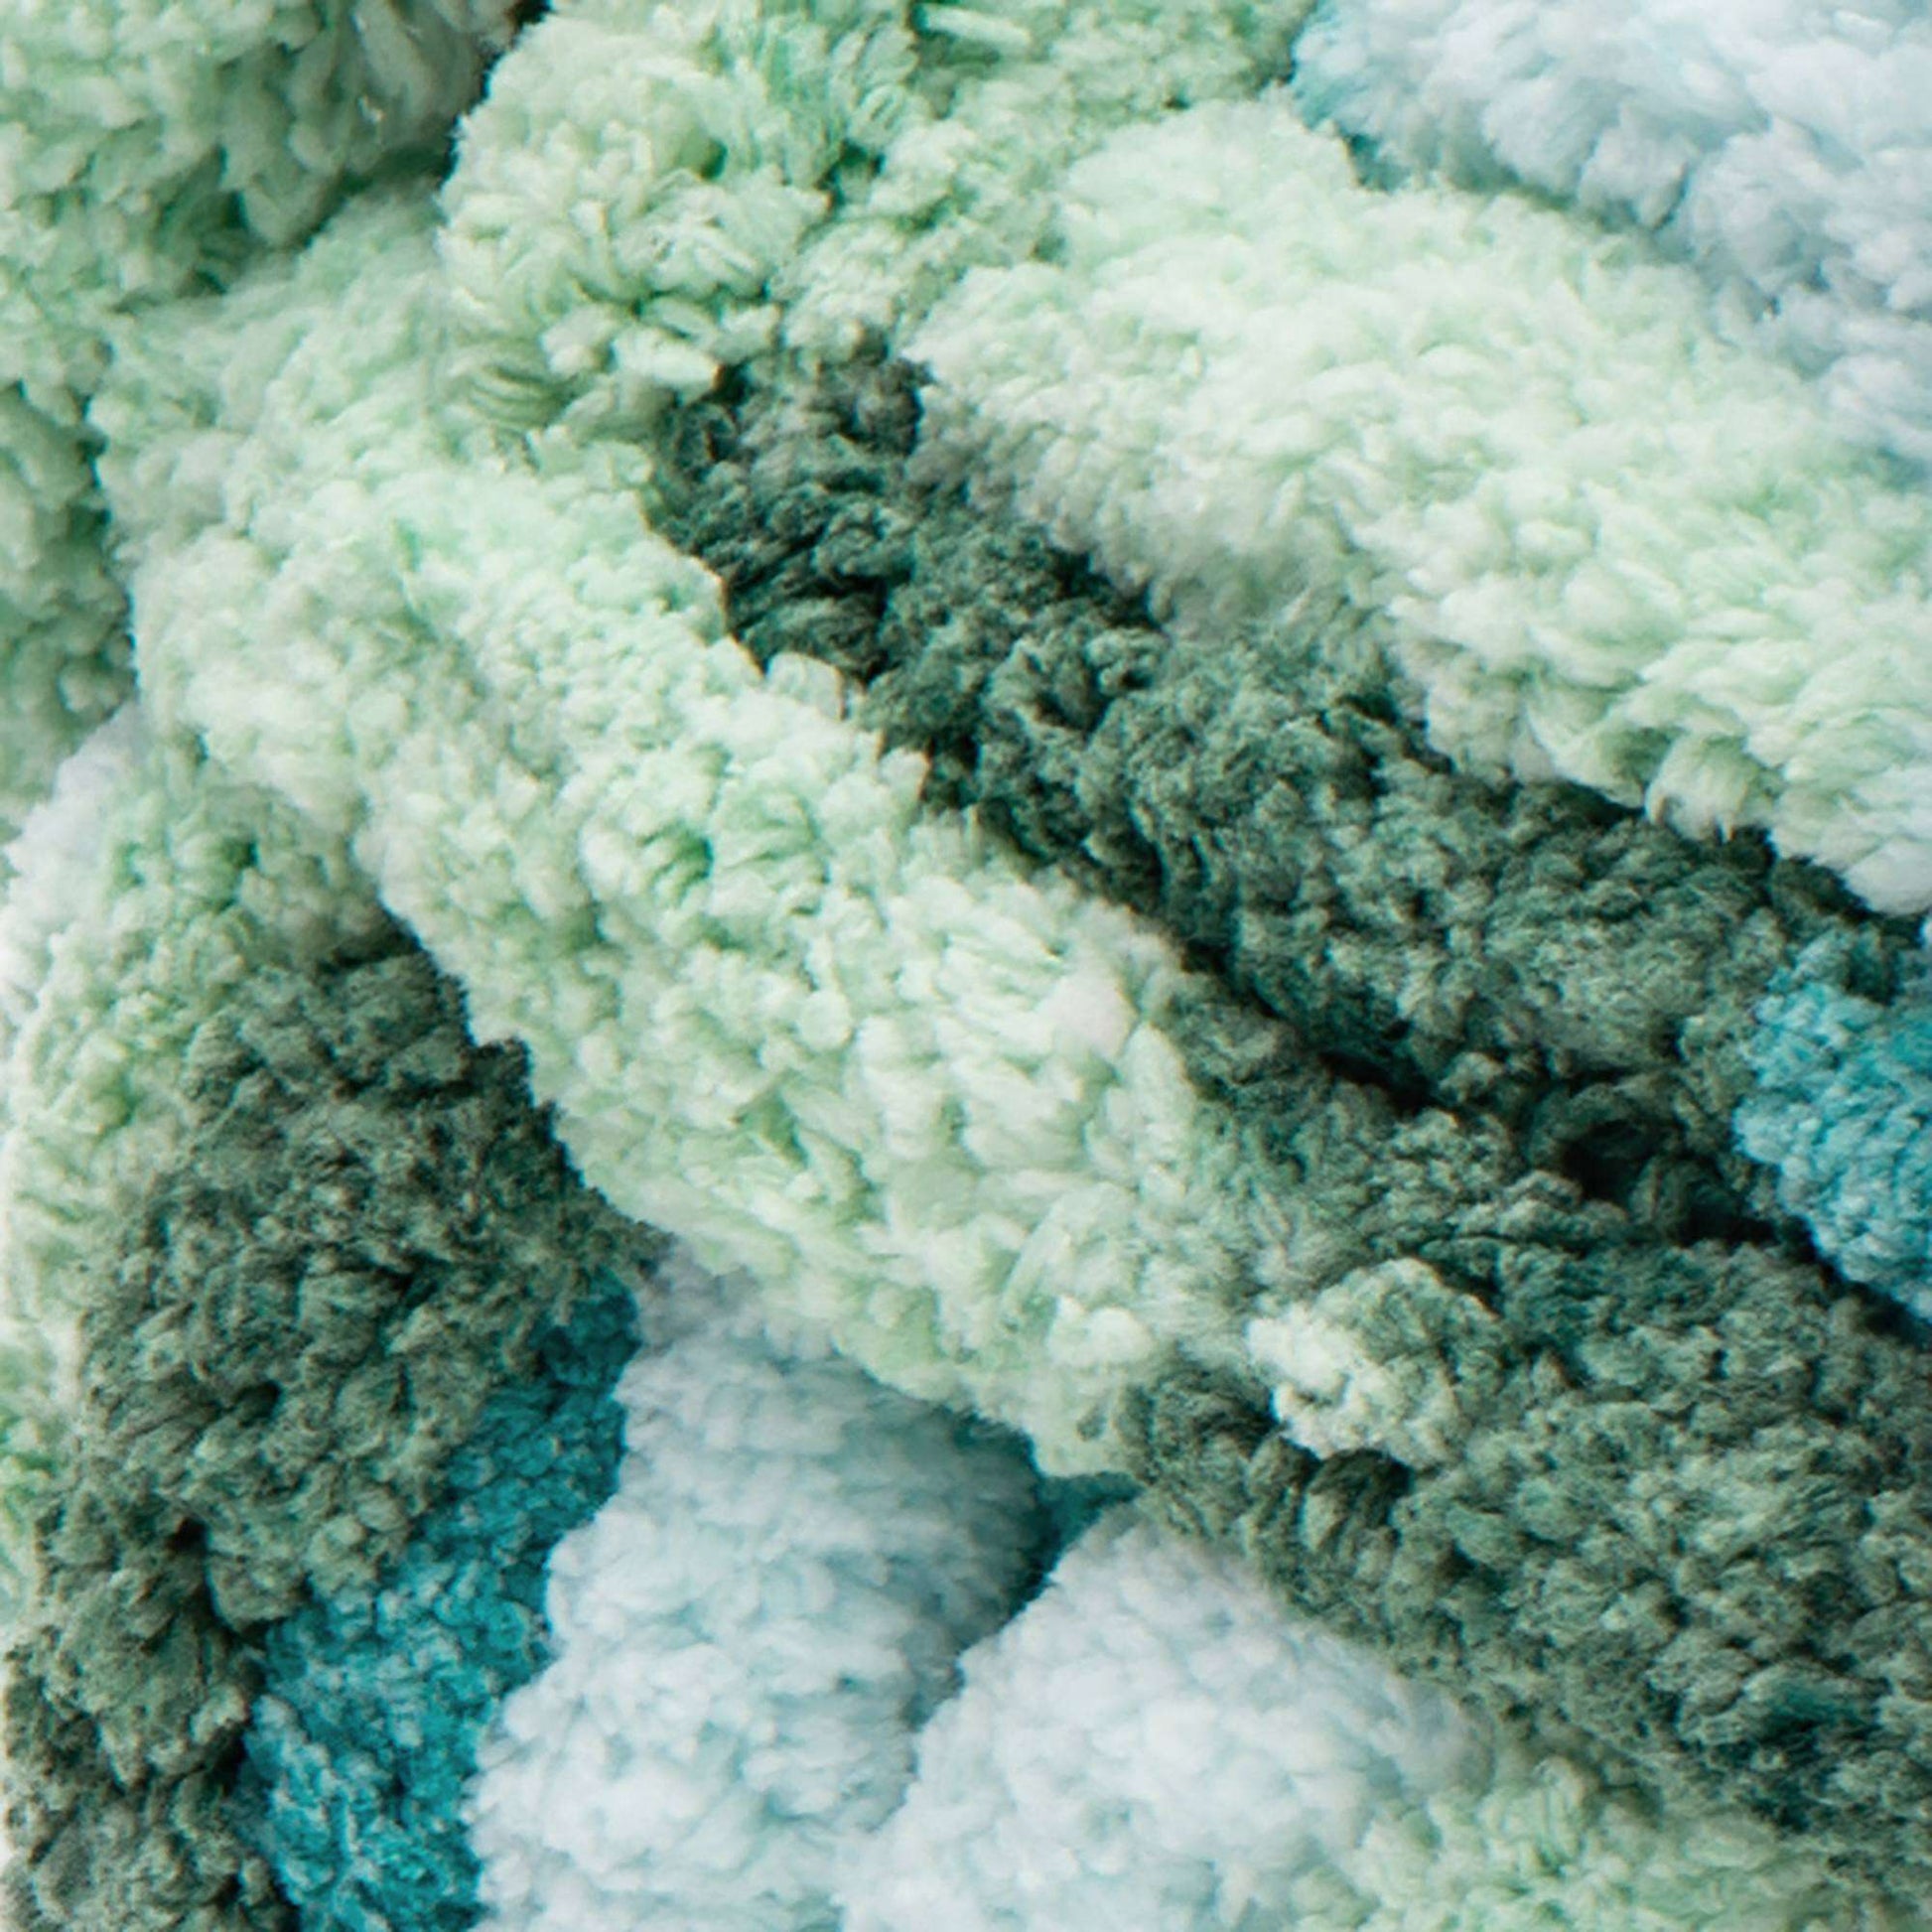 Bernat Blanket Extra Thick Yarn (600g/21.2oz) - Discontinued shades